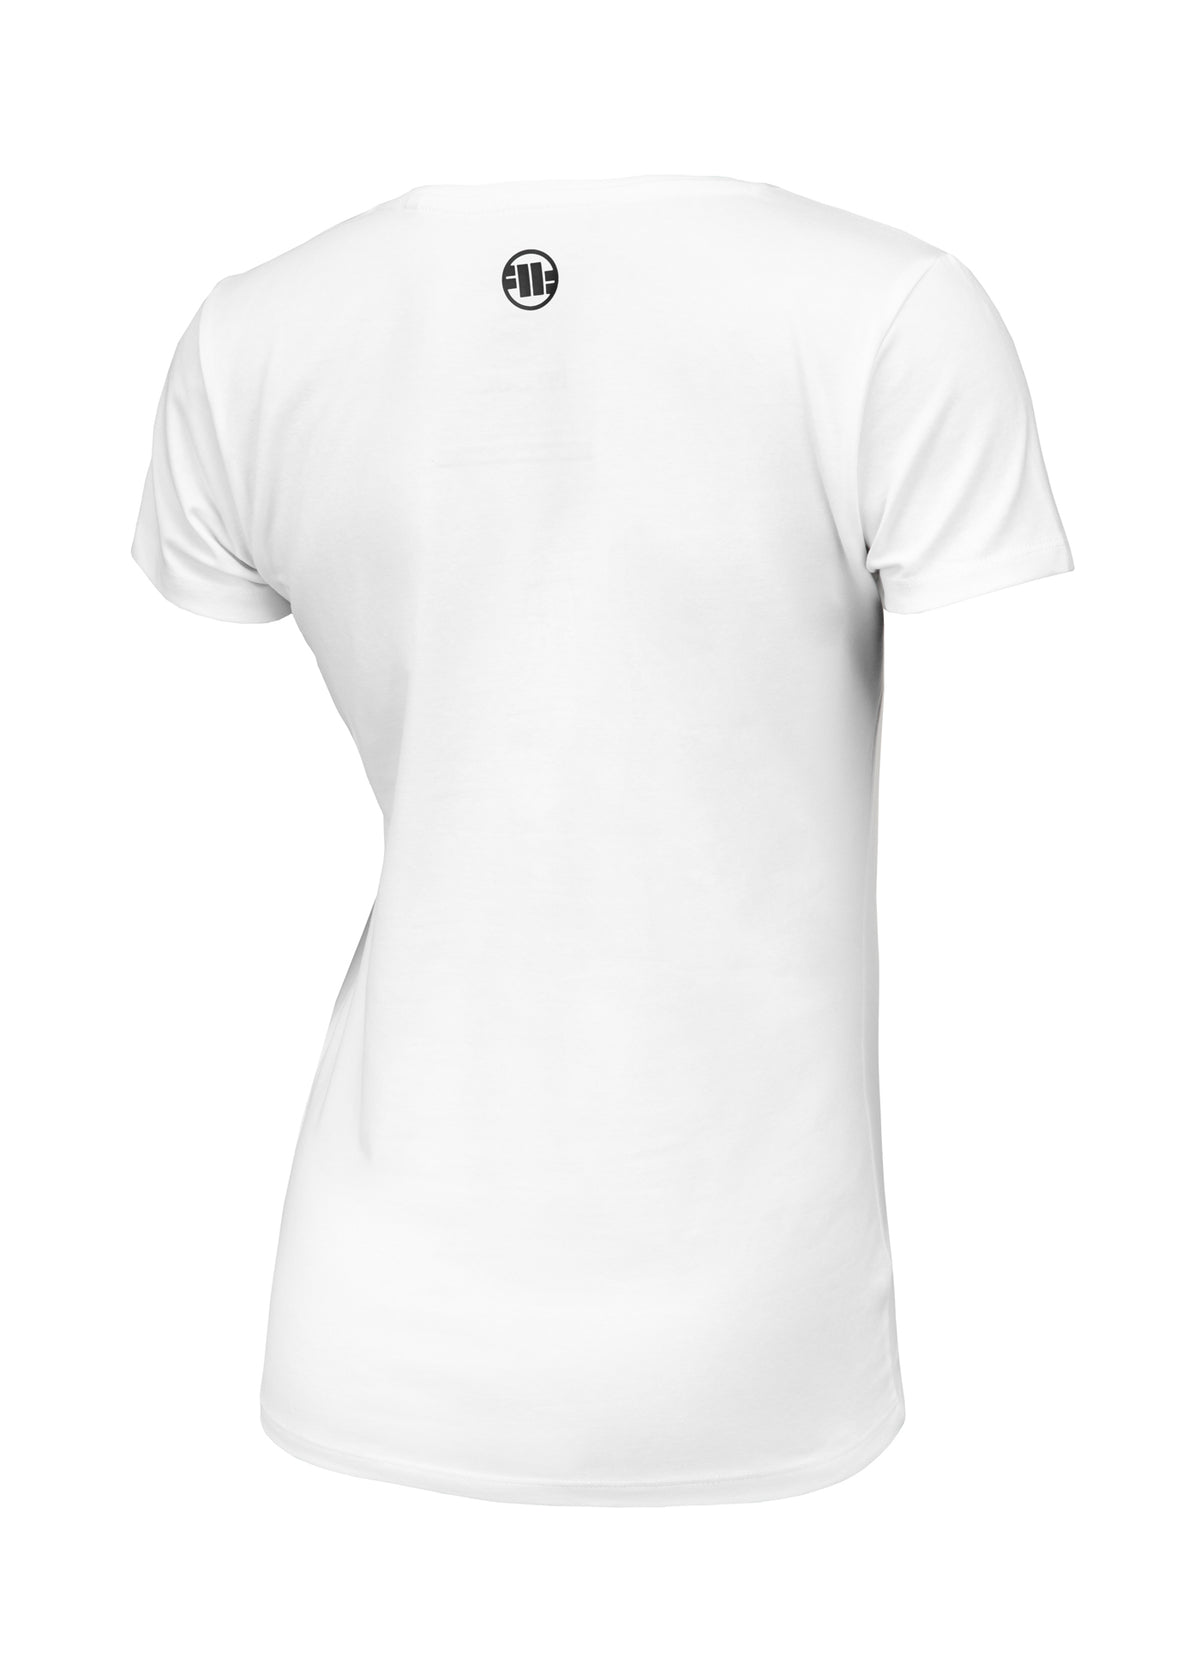 CLASSIC BOXING REGULAR White T-shirt - Pitbullstore.eu